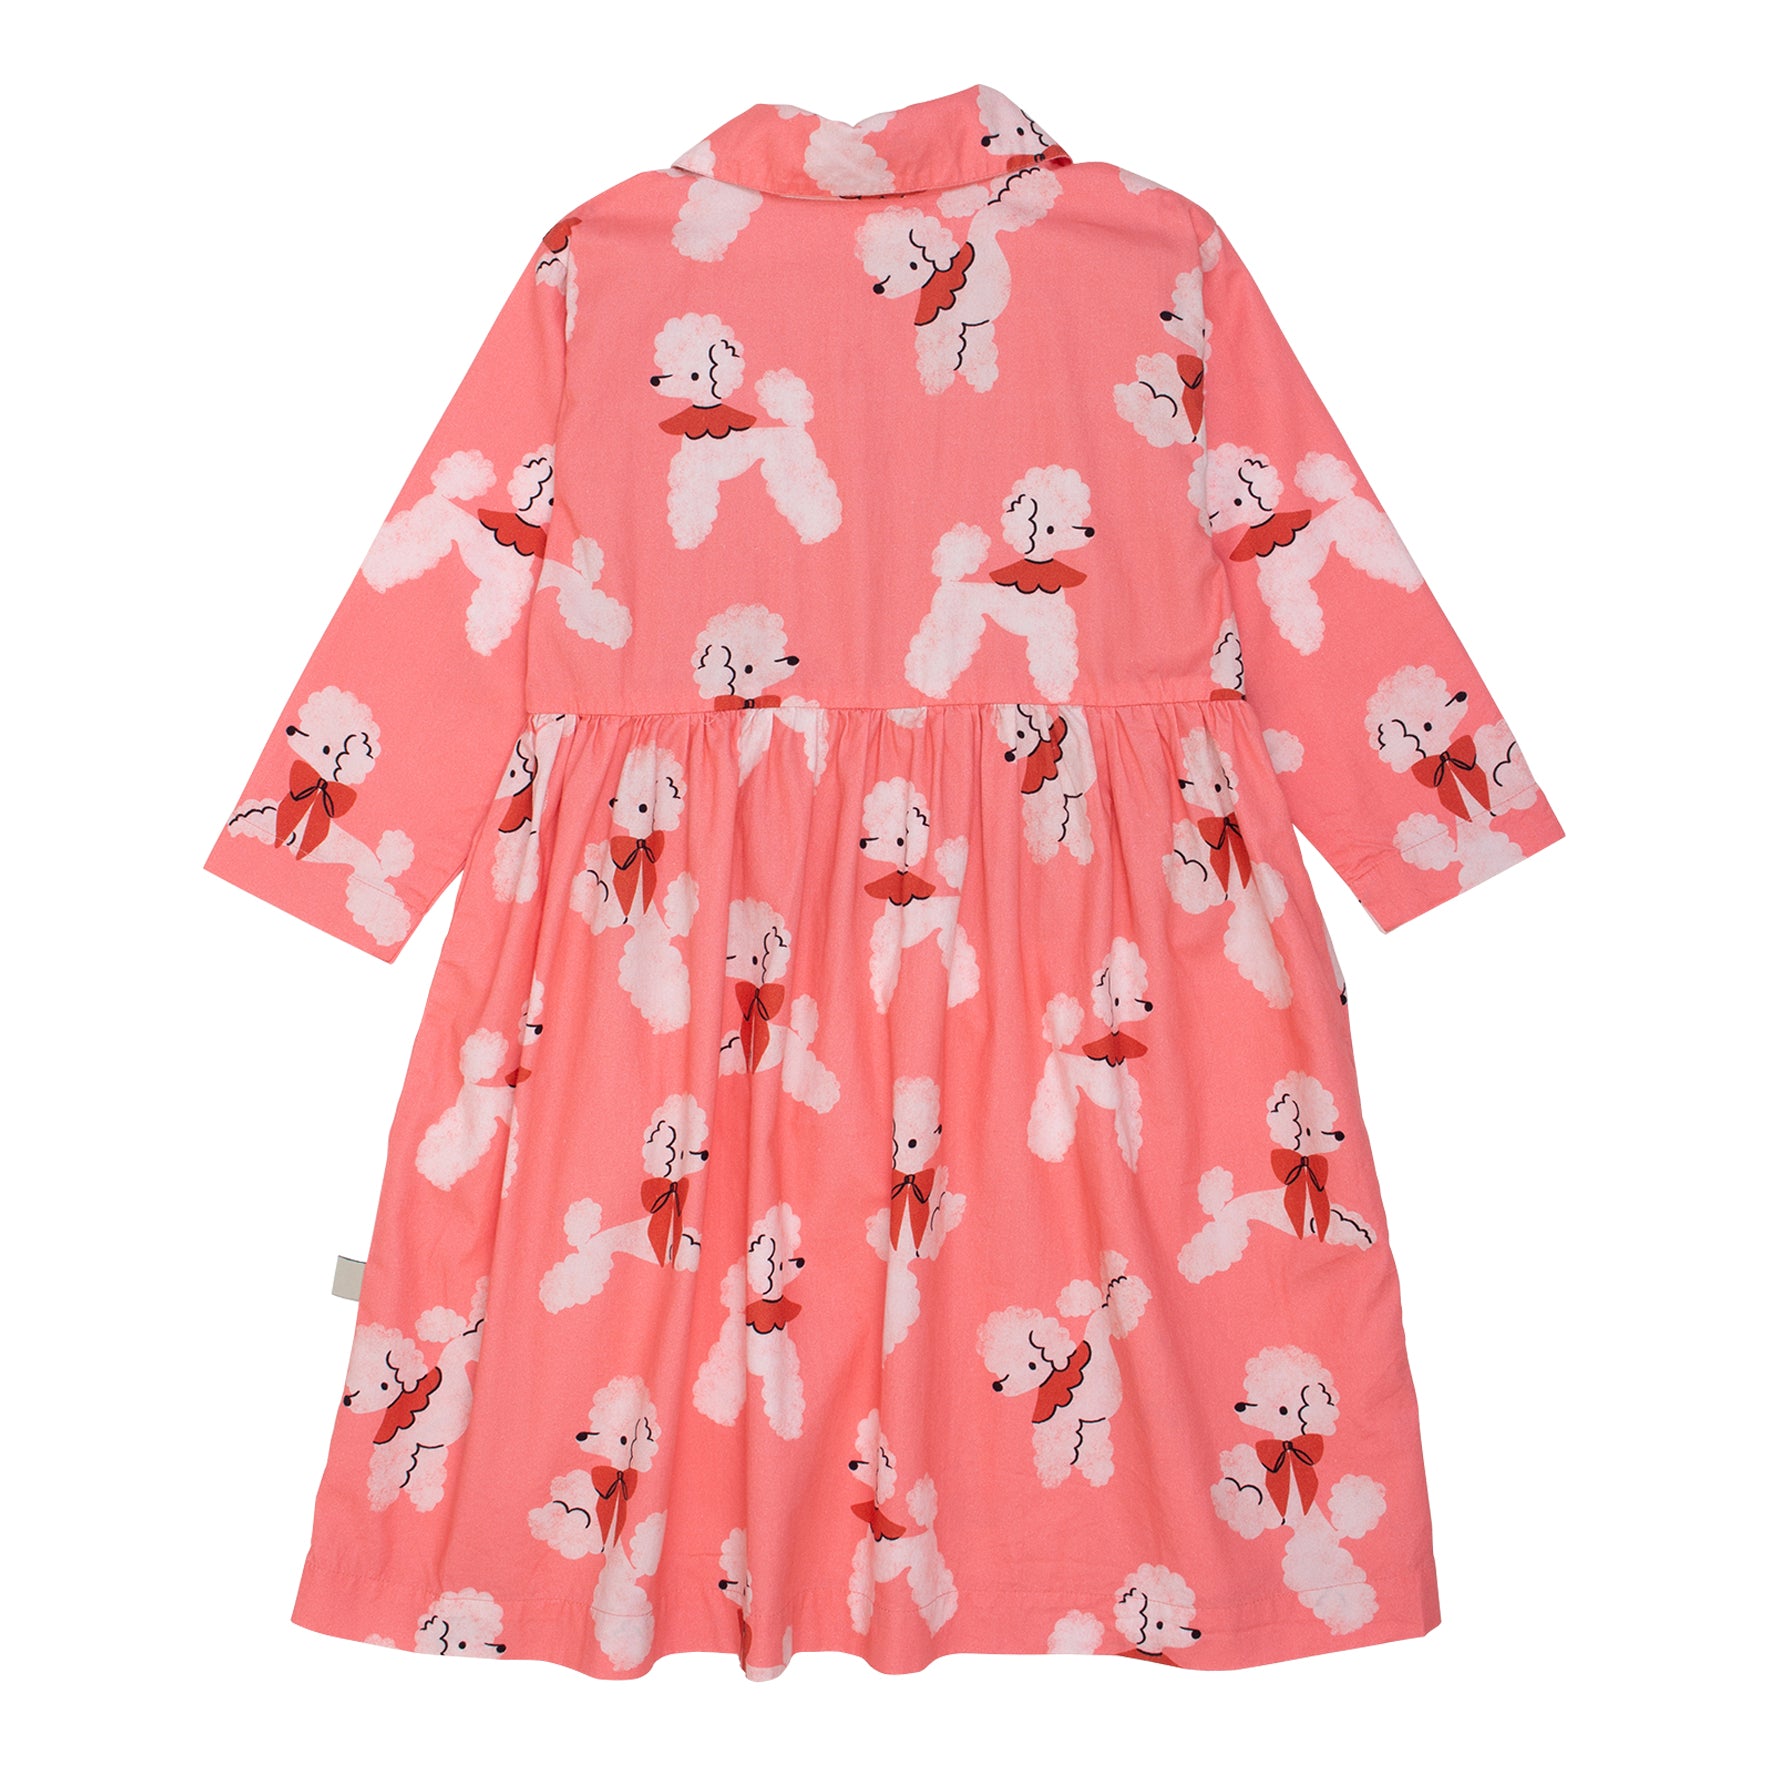 Nube Dress - Pale Pink Poodles